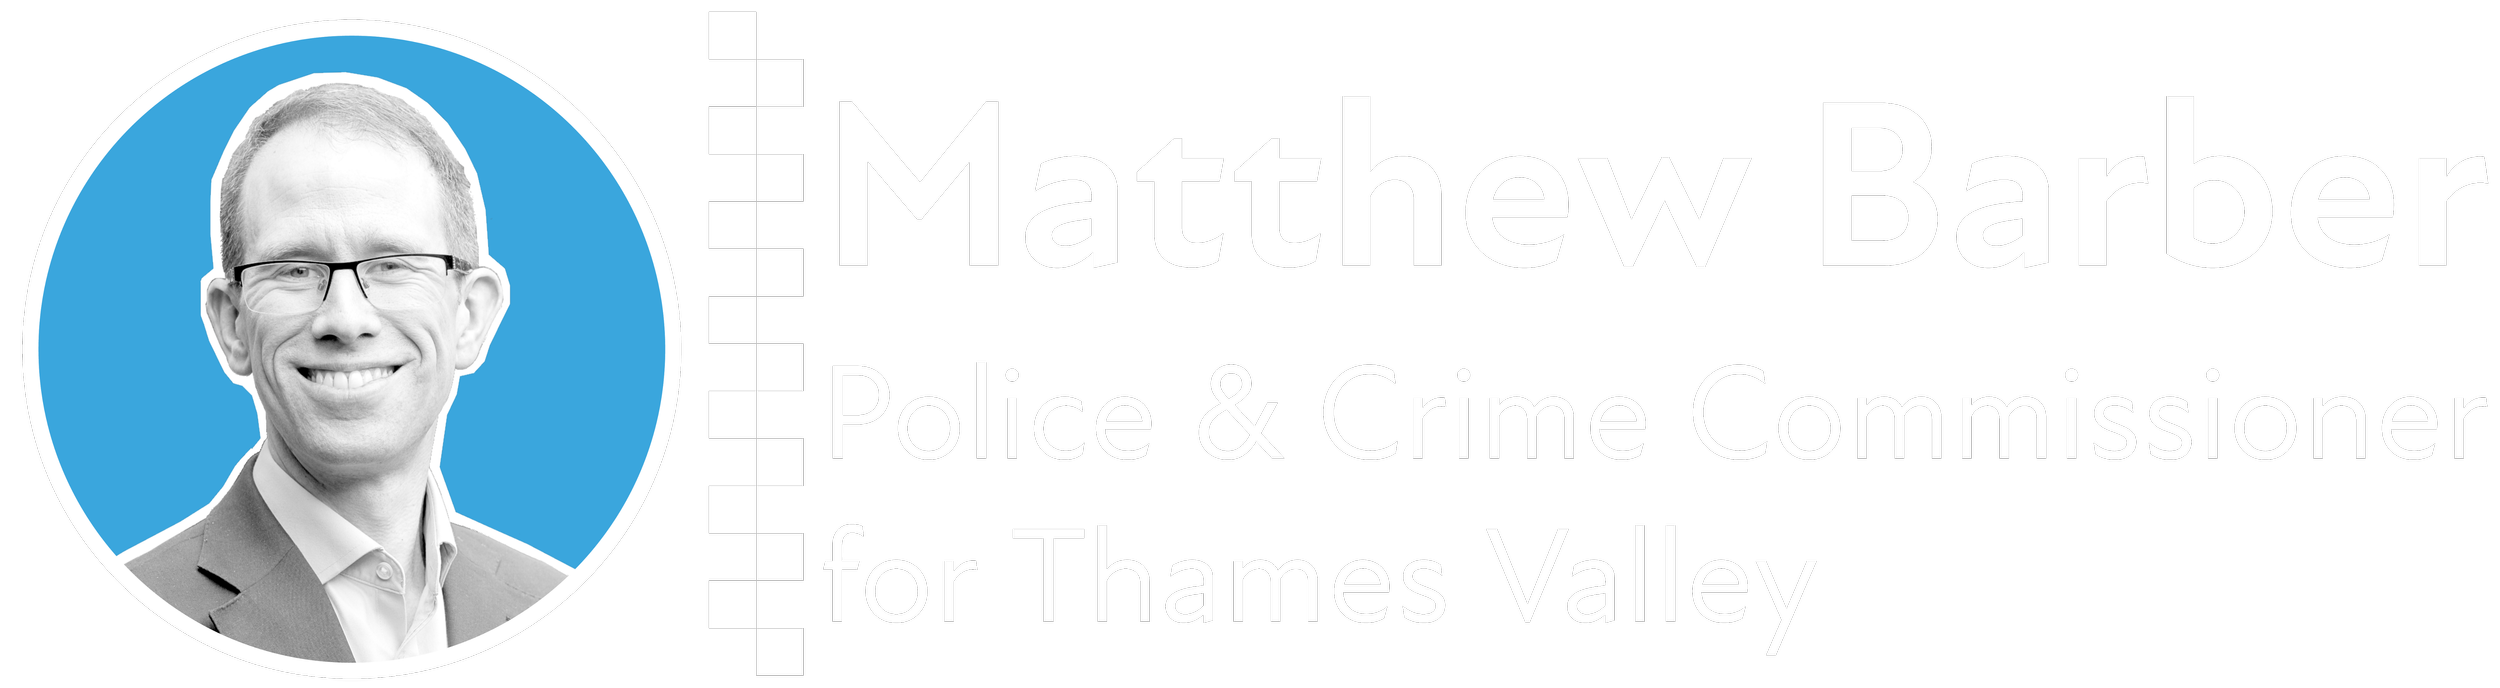 Matthew Barber - Police & Crime Commissioner for Thames Valley